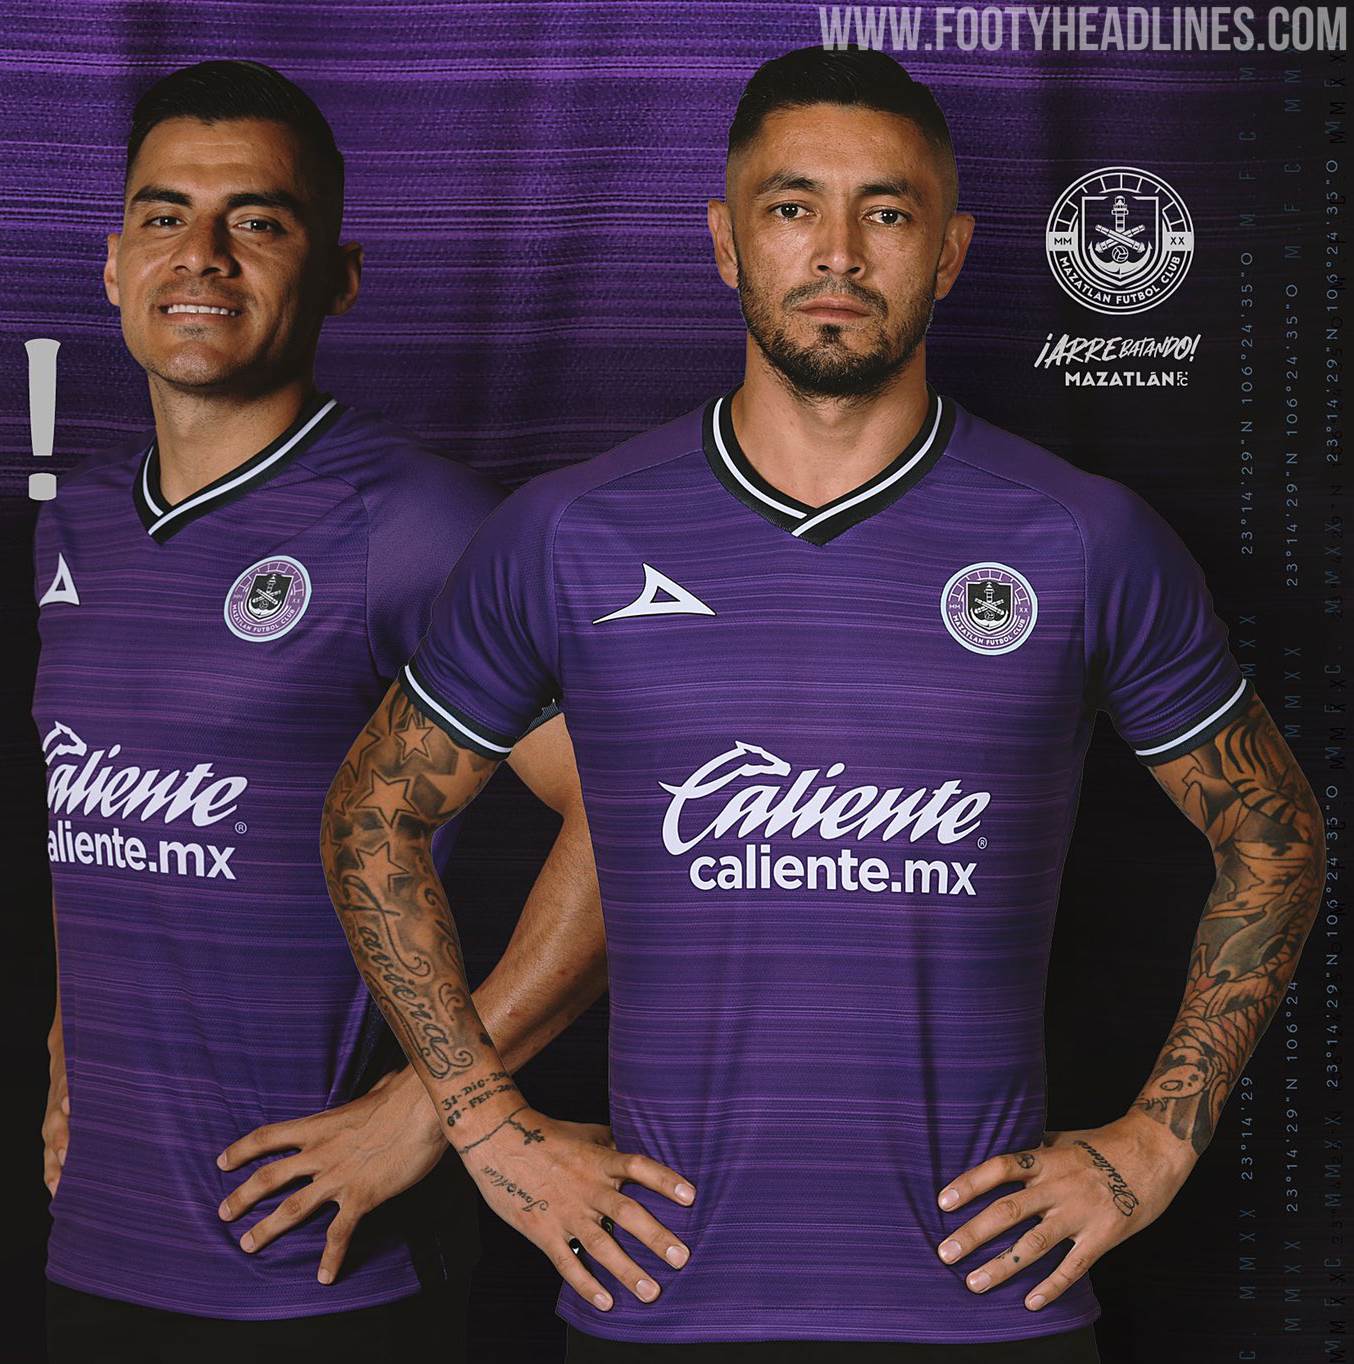 Inaugural Mazatlán FC Kit Revealed - Footy Headlines